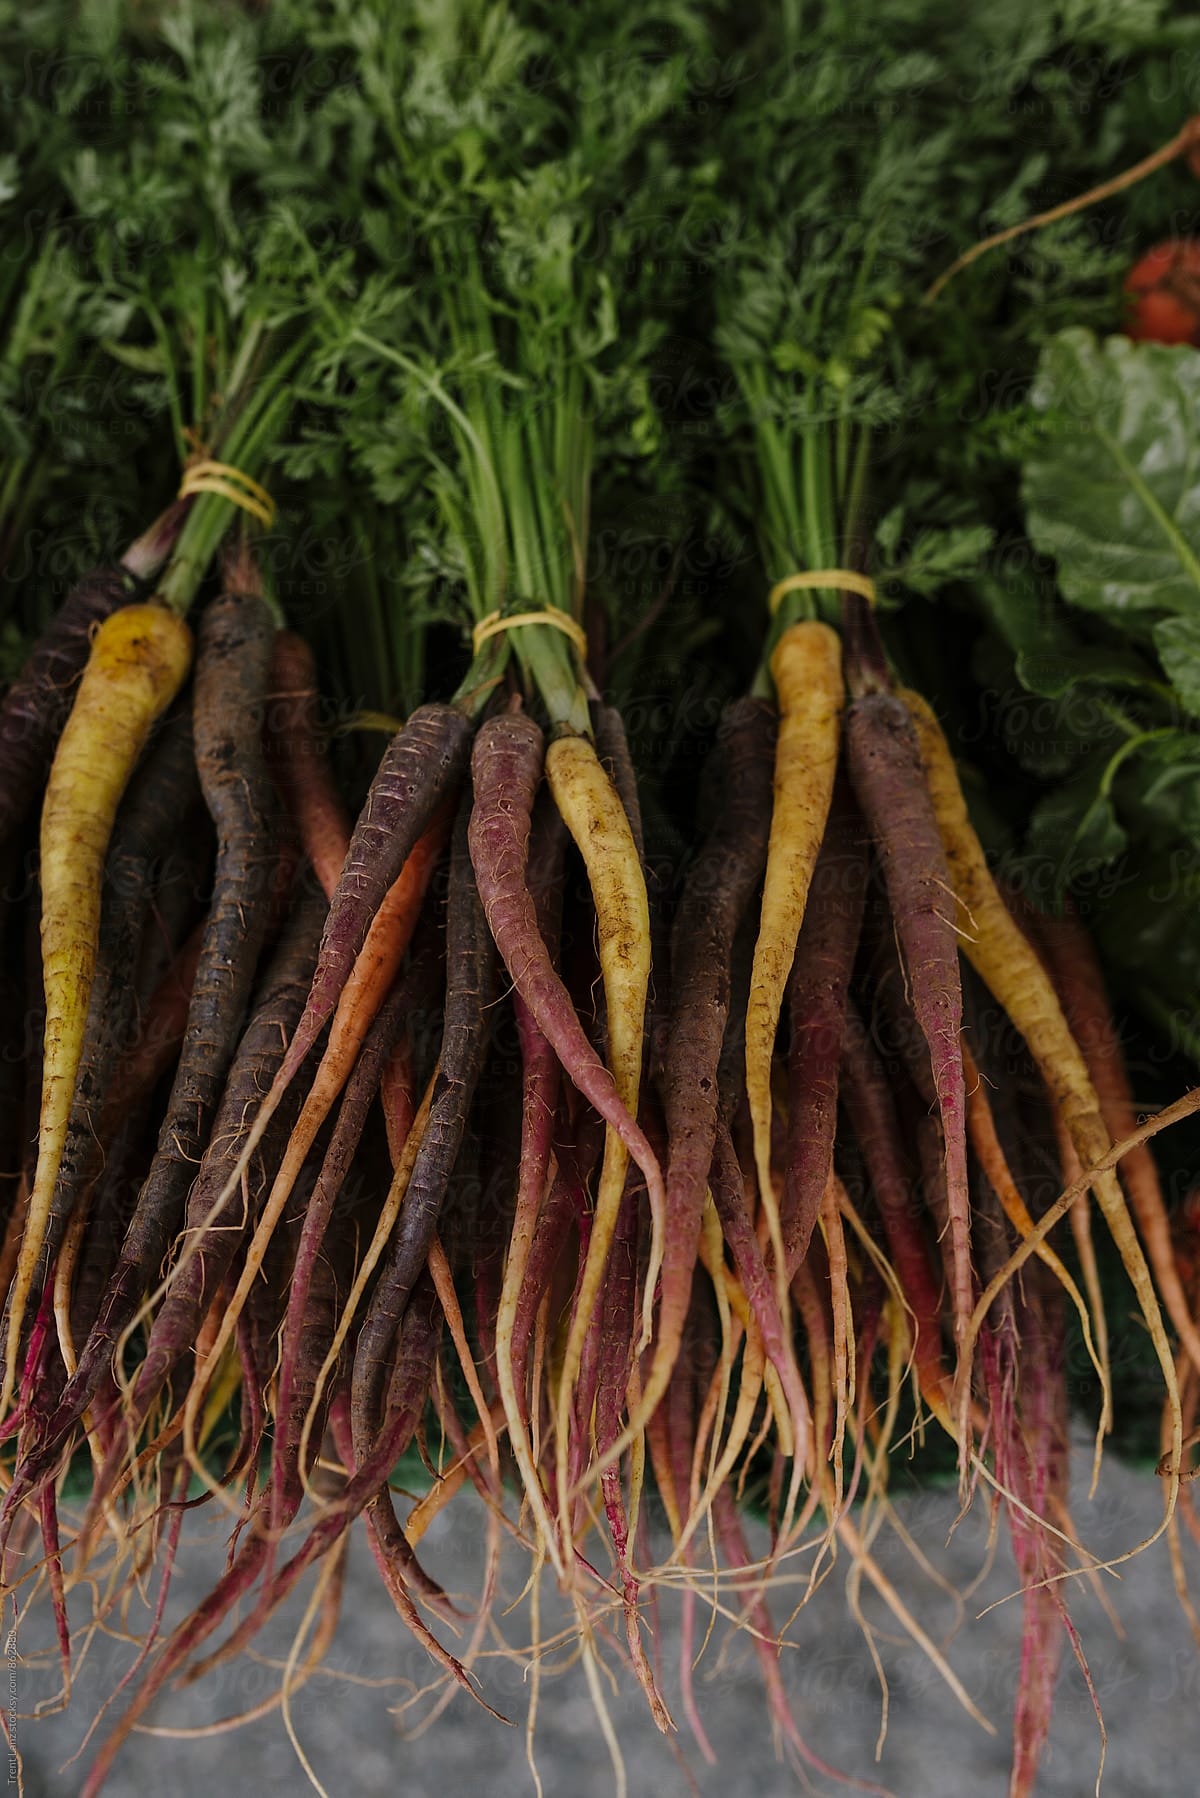 Farmers Market fresh bunch of carrots